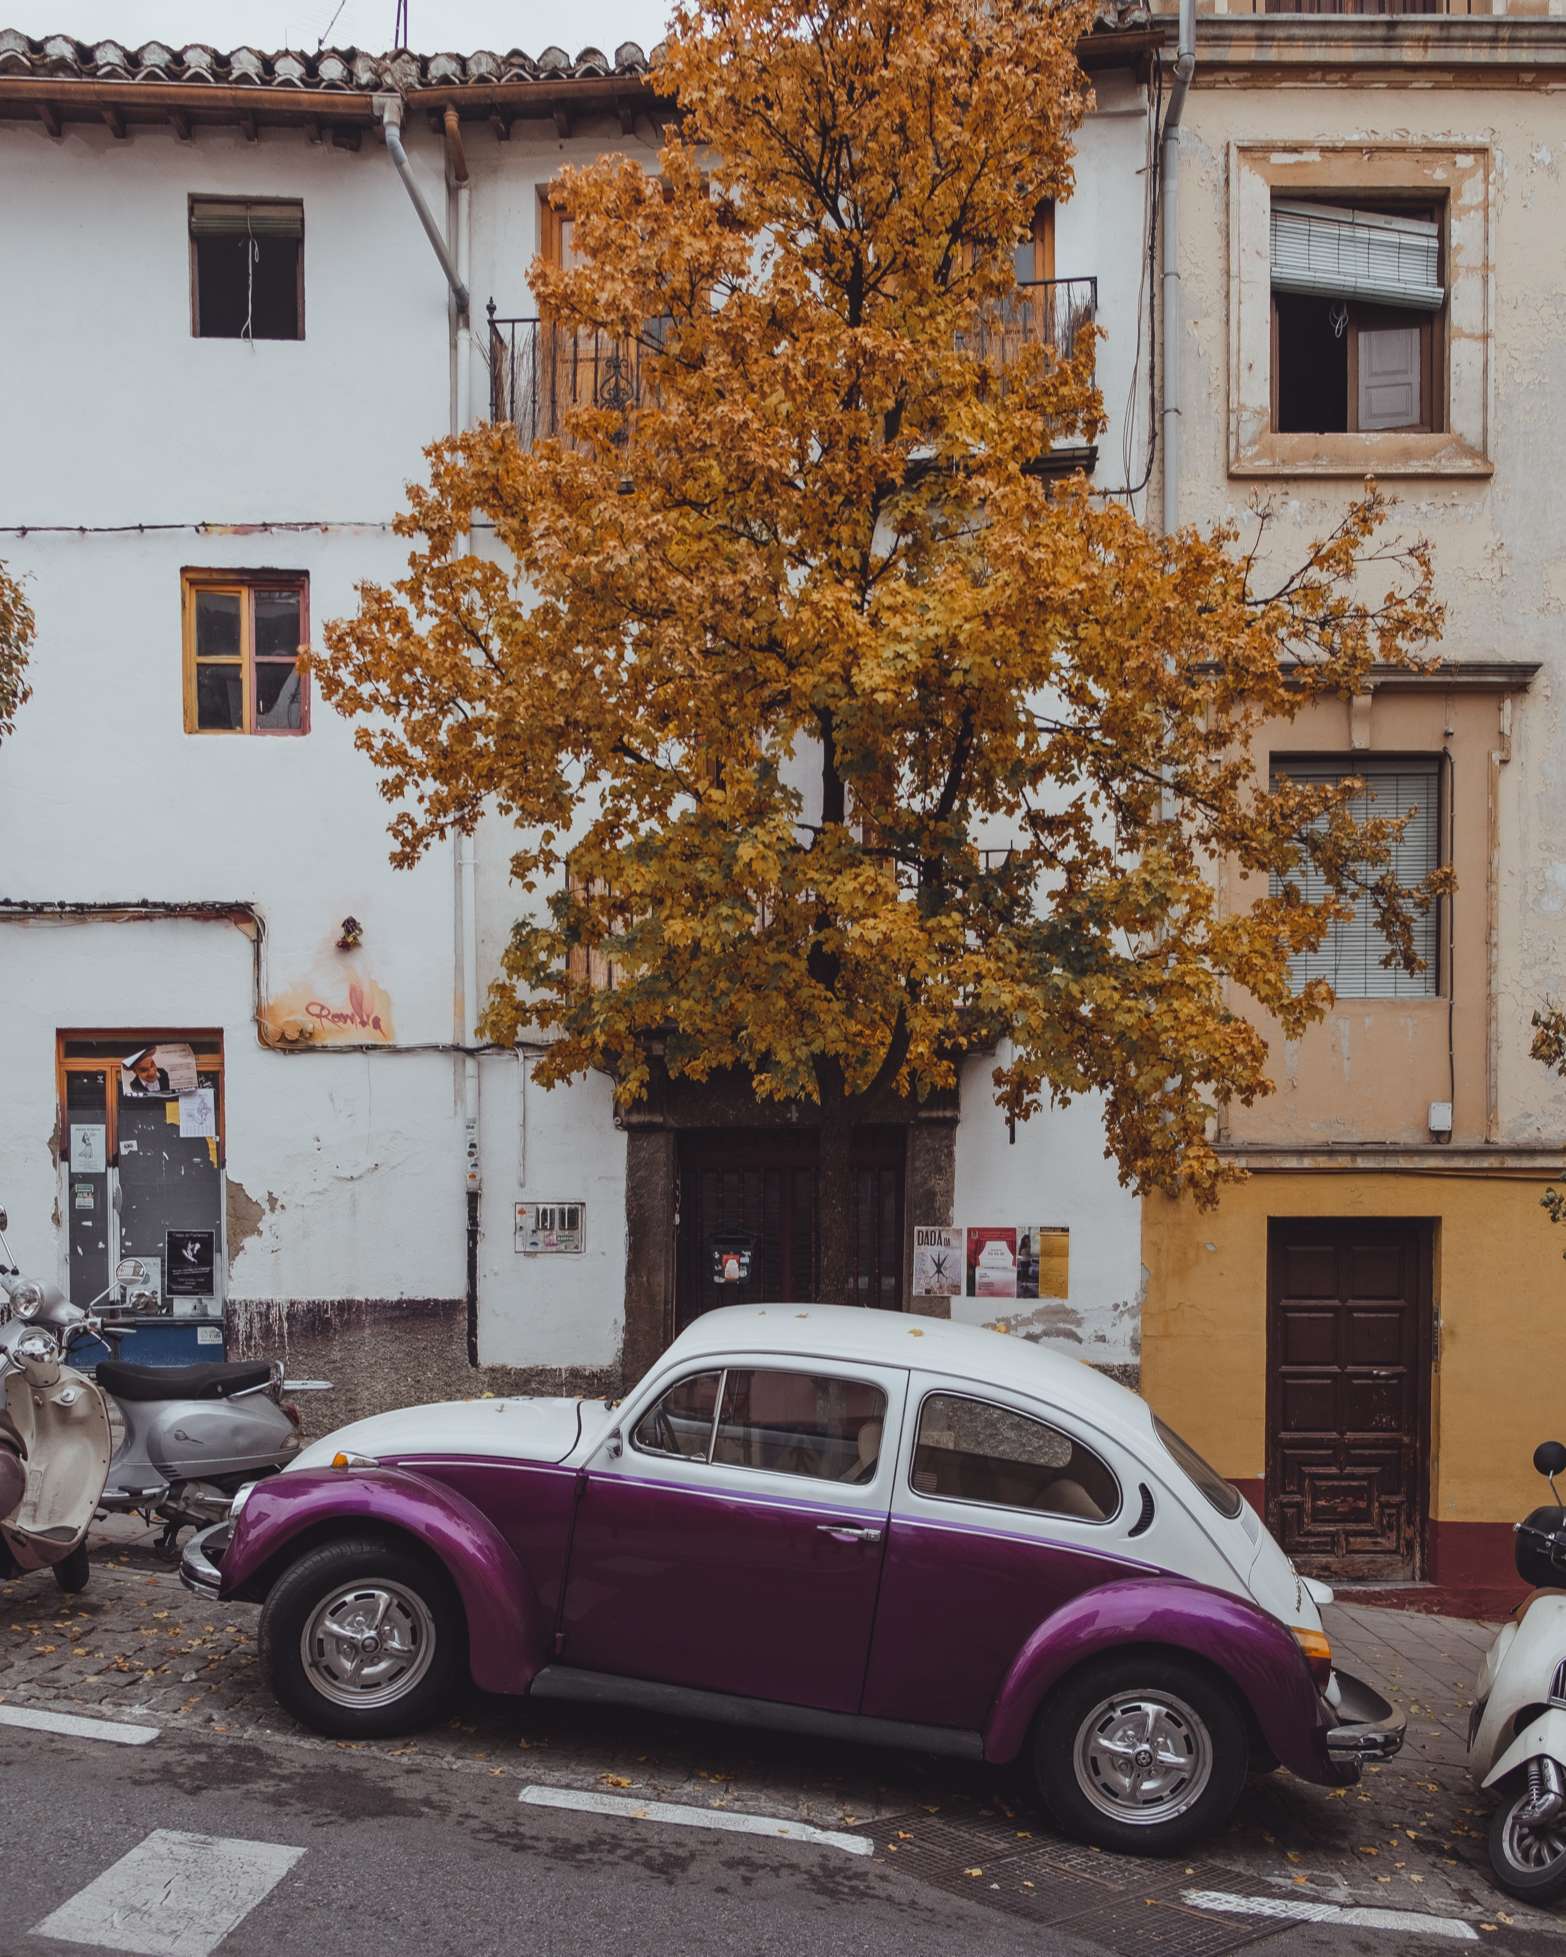 Old metallic purple Beetle car under a copper coloured tree, Granada